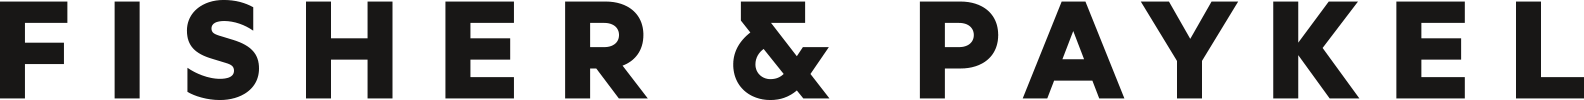 Fisherpaykel-logo-1